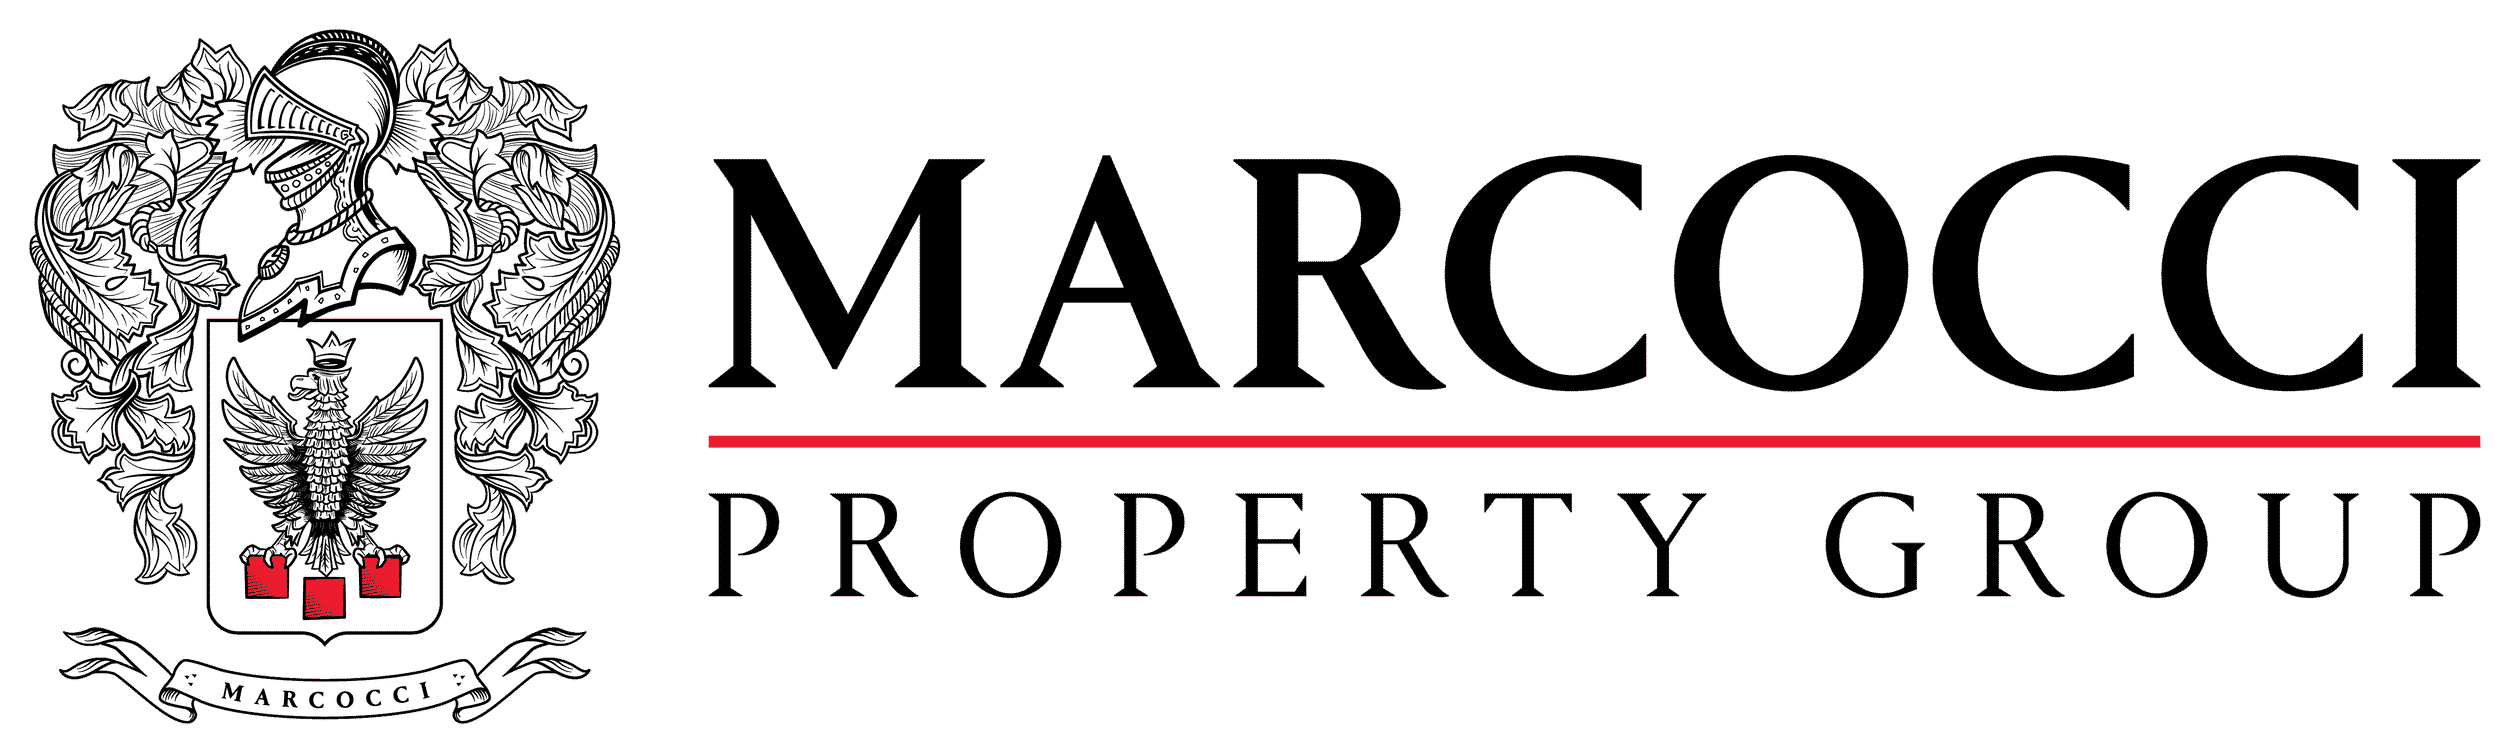 Marcocci Property Group Logo